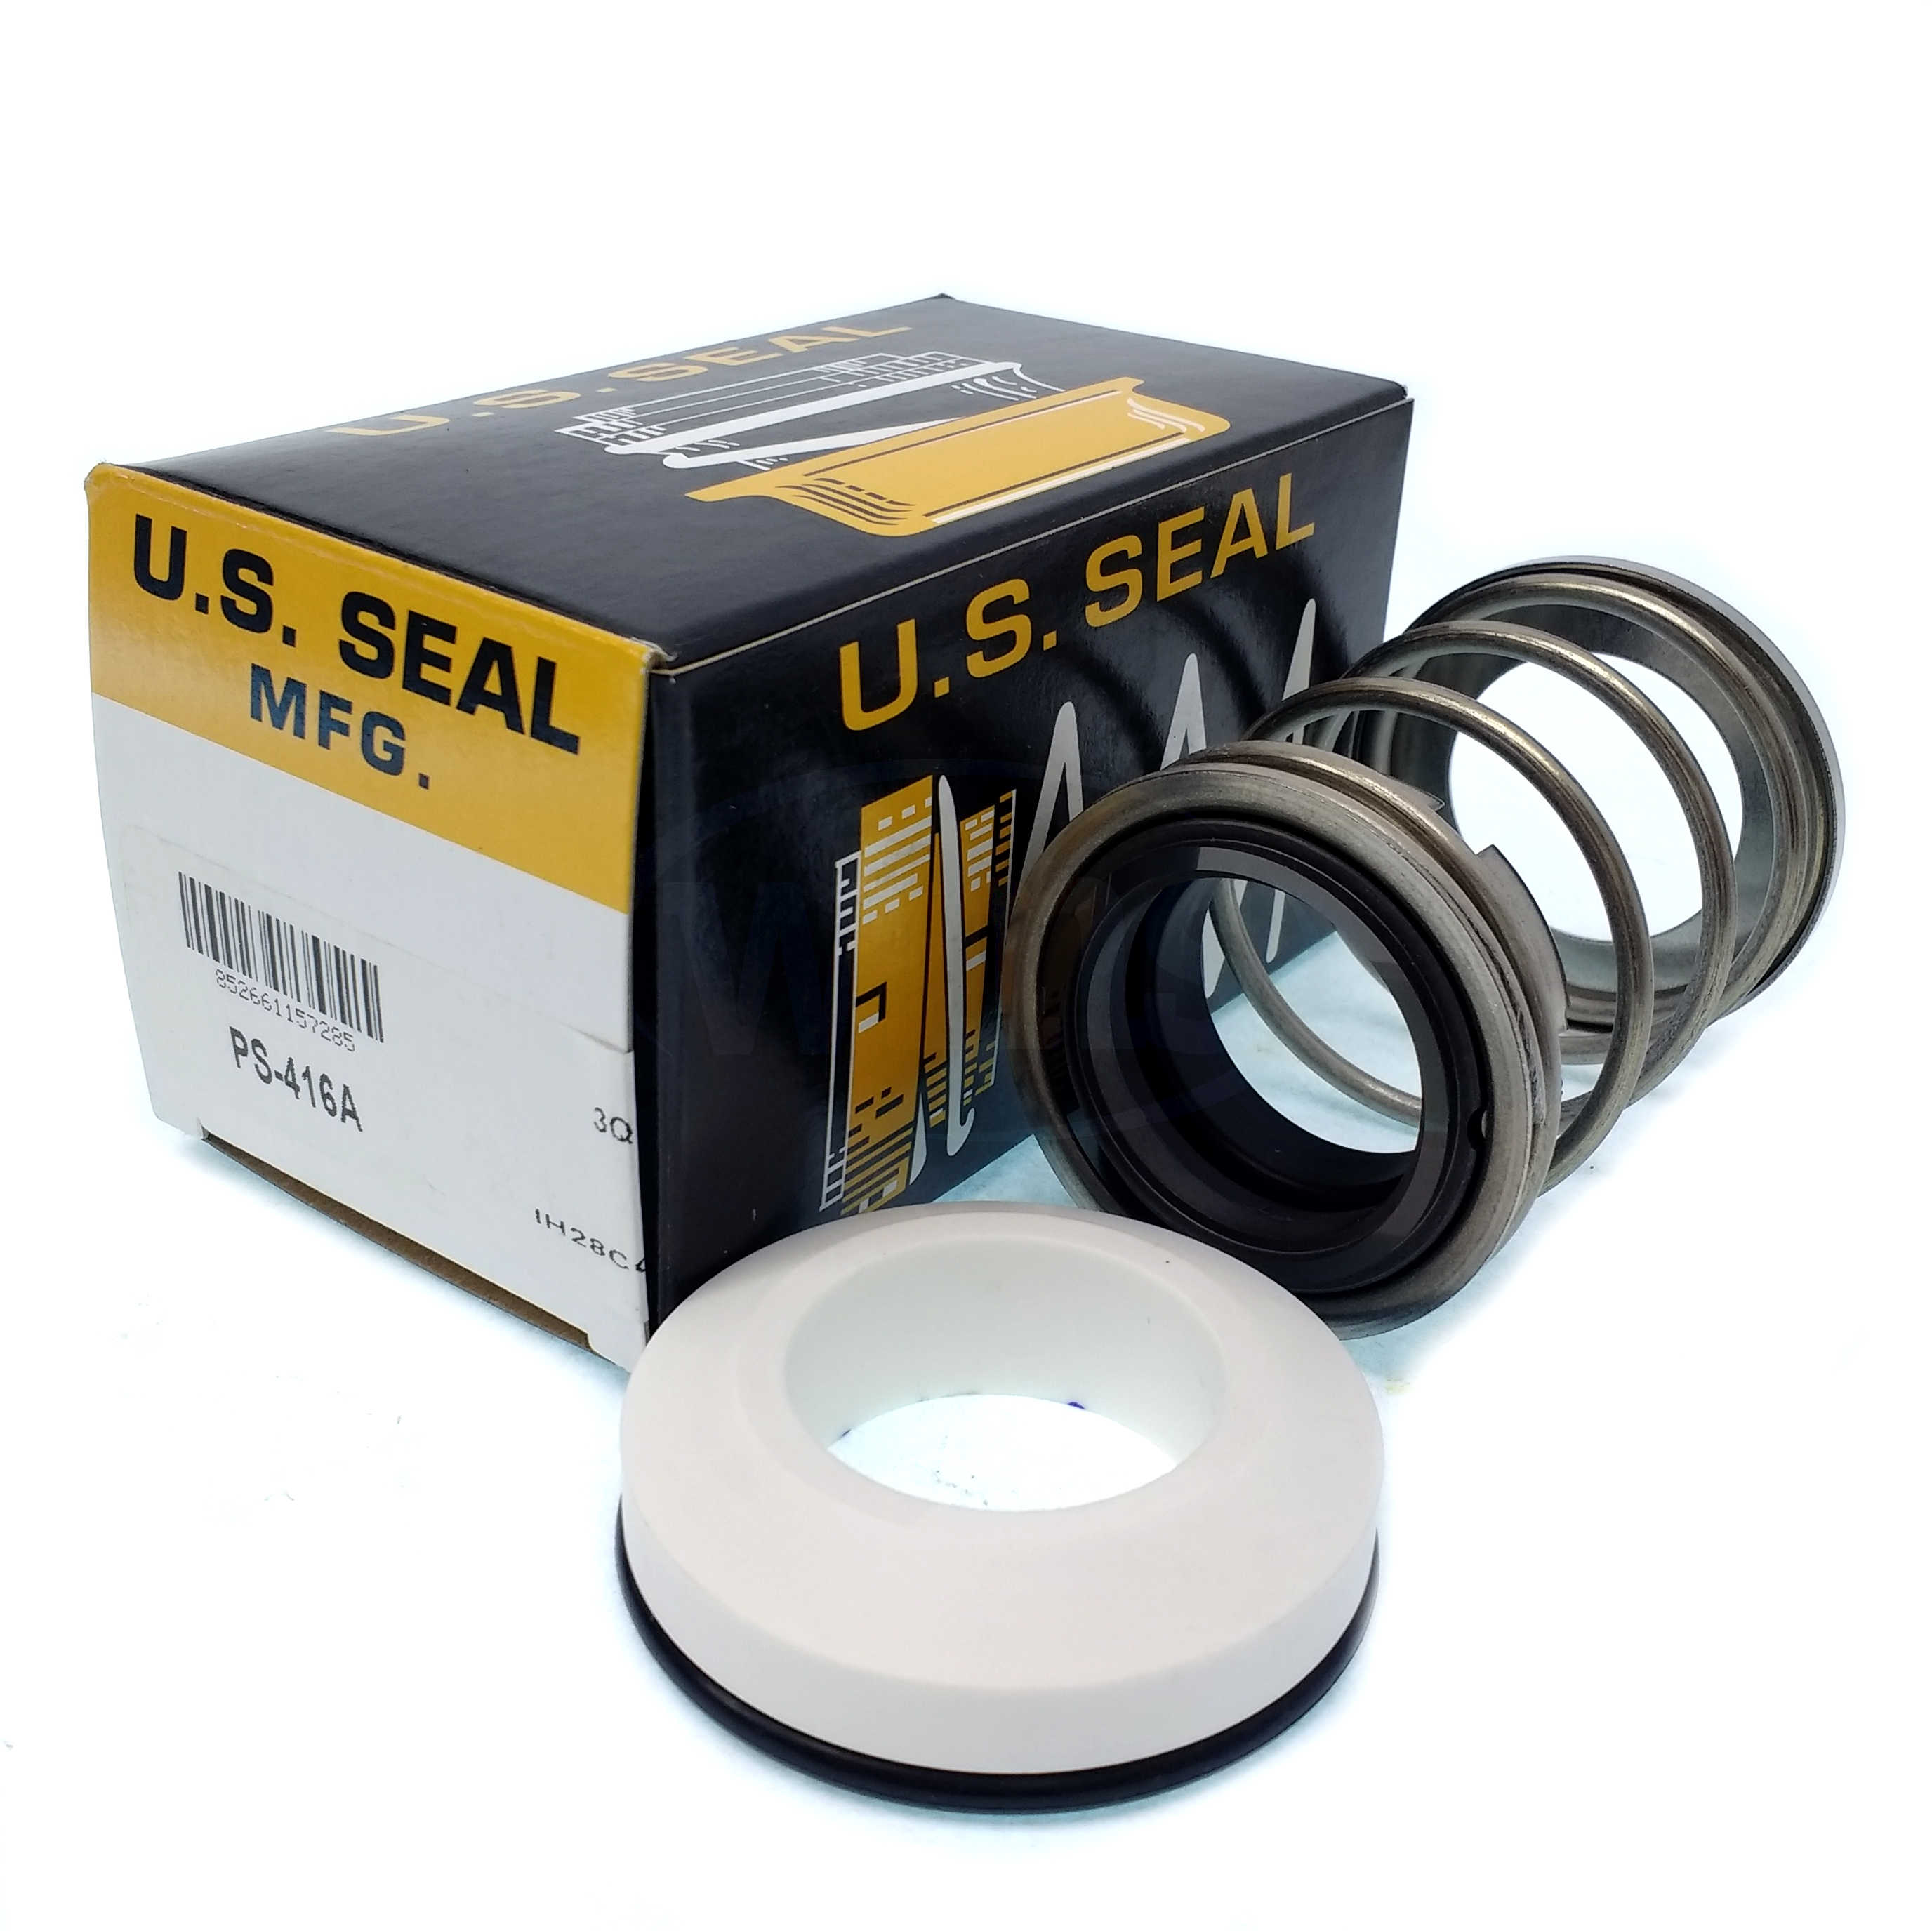 PS-416A U.S. Seal Mfg 1-1/4' Pump Seal 1